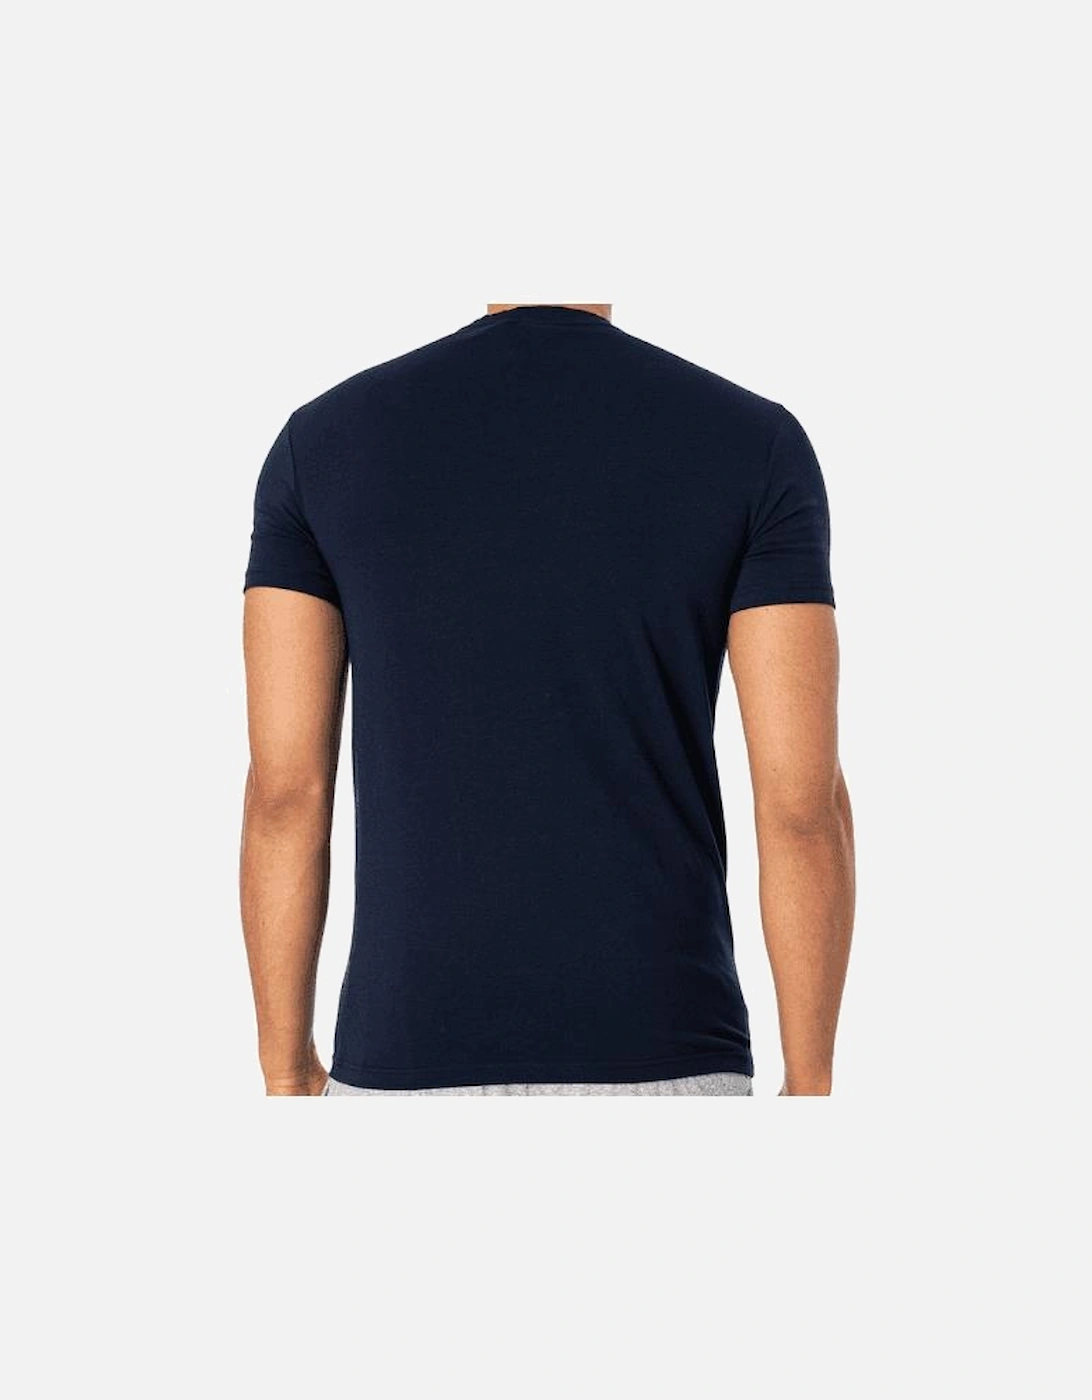 Cotton Print Logo Round Neck Navy T-Shirt